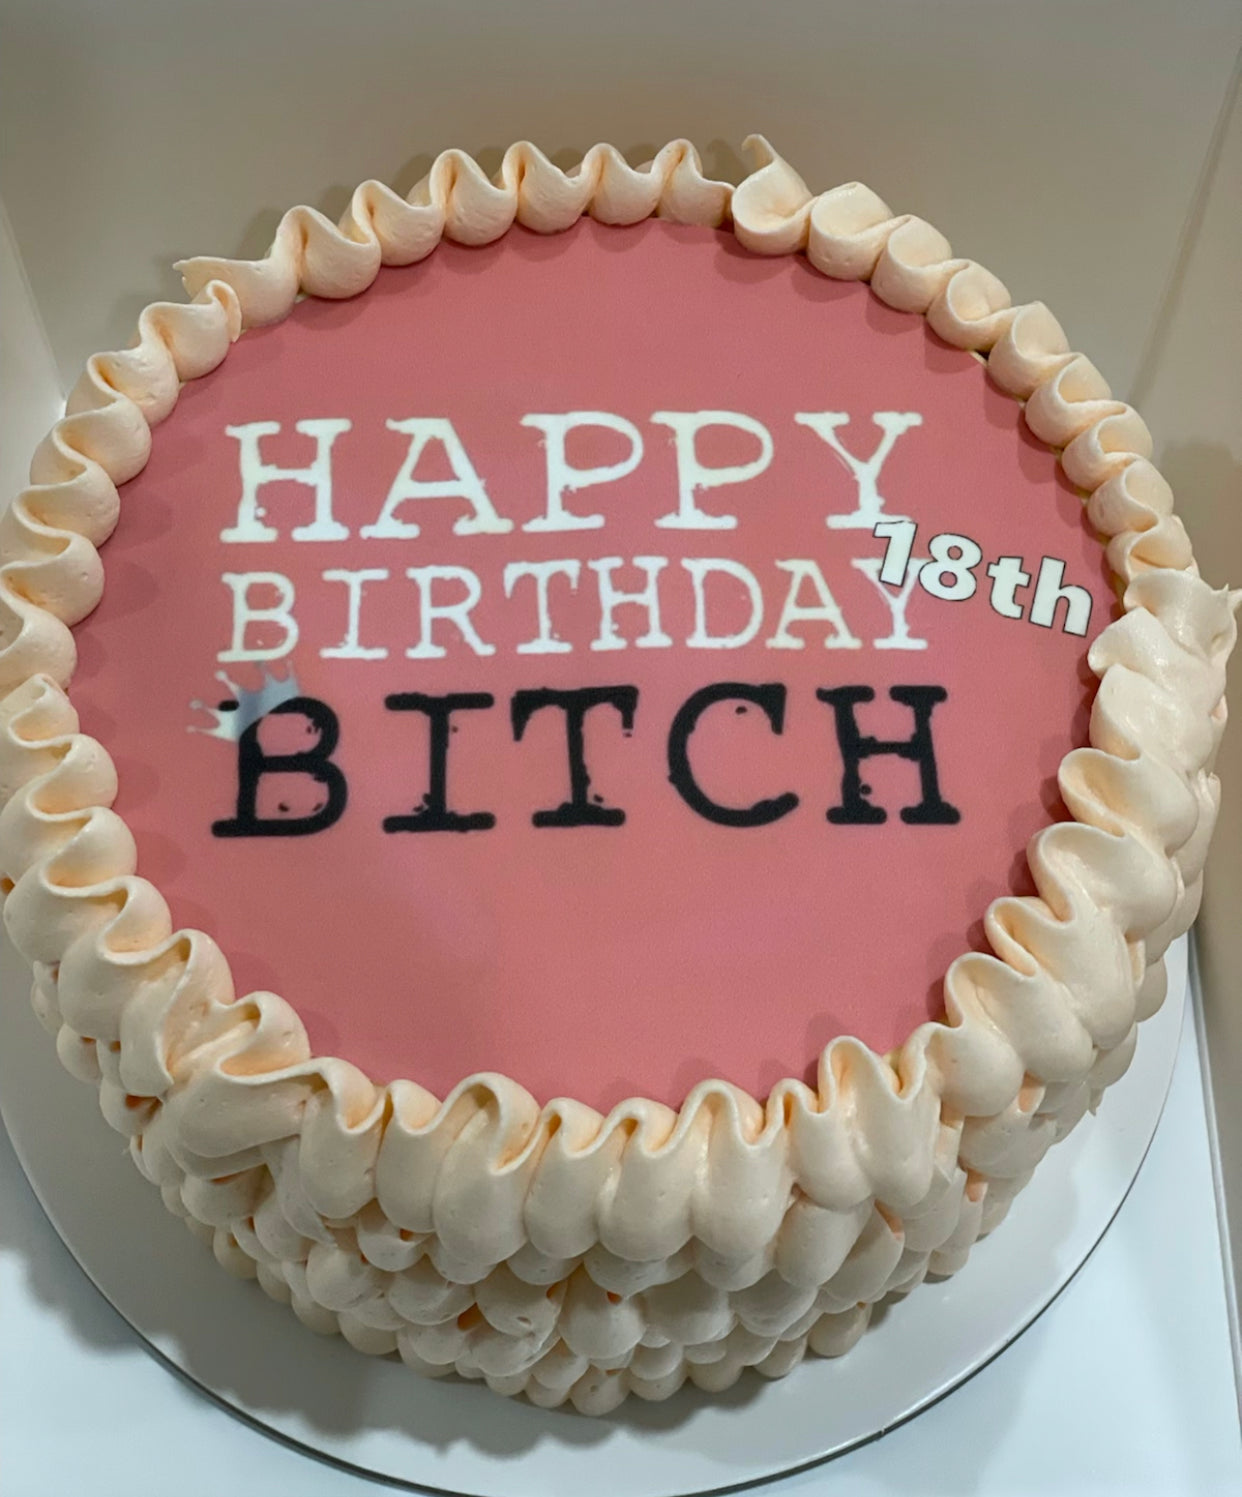 Happy birthday bitch 6”cake